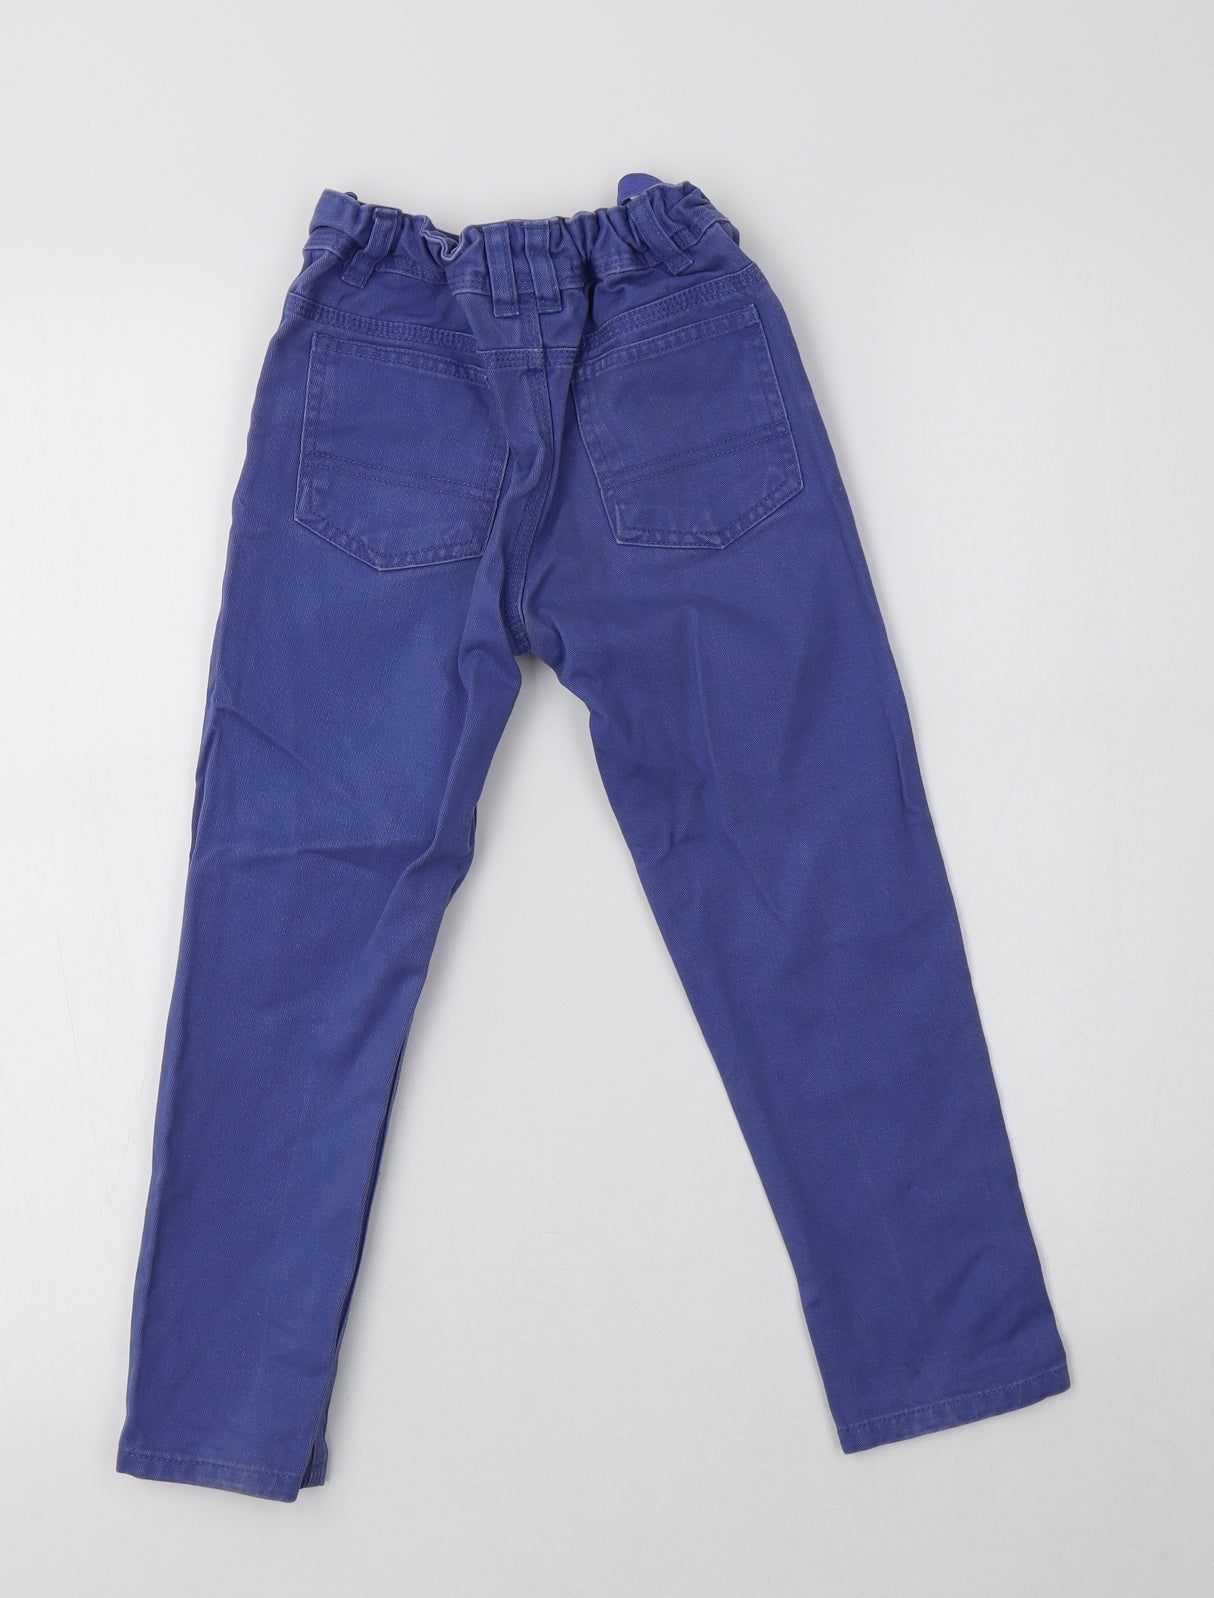 Primark Girls Blue  Cotton Skinny Jeans Size 5-6 Years  Regular